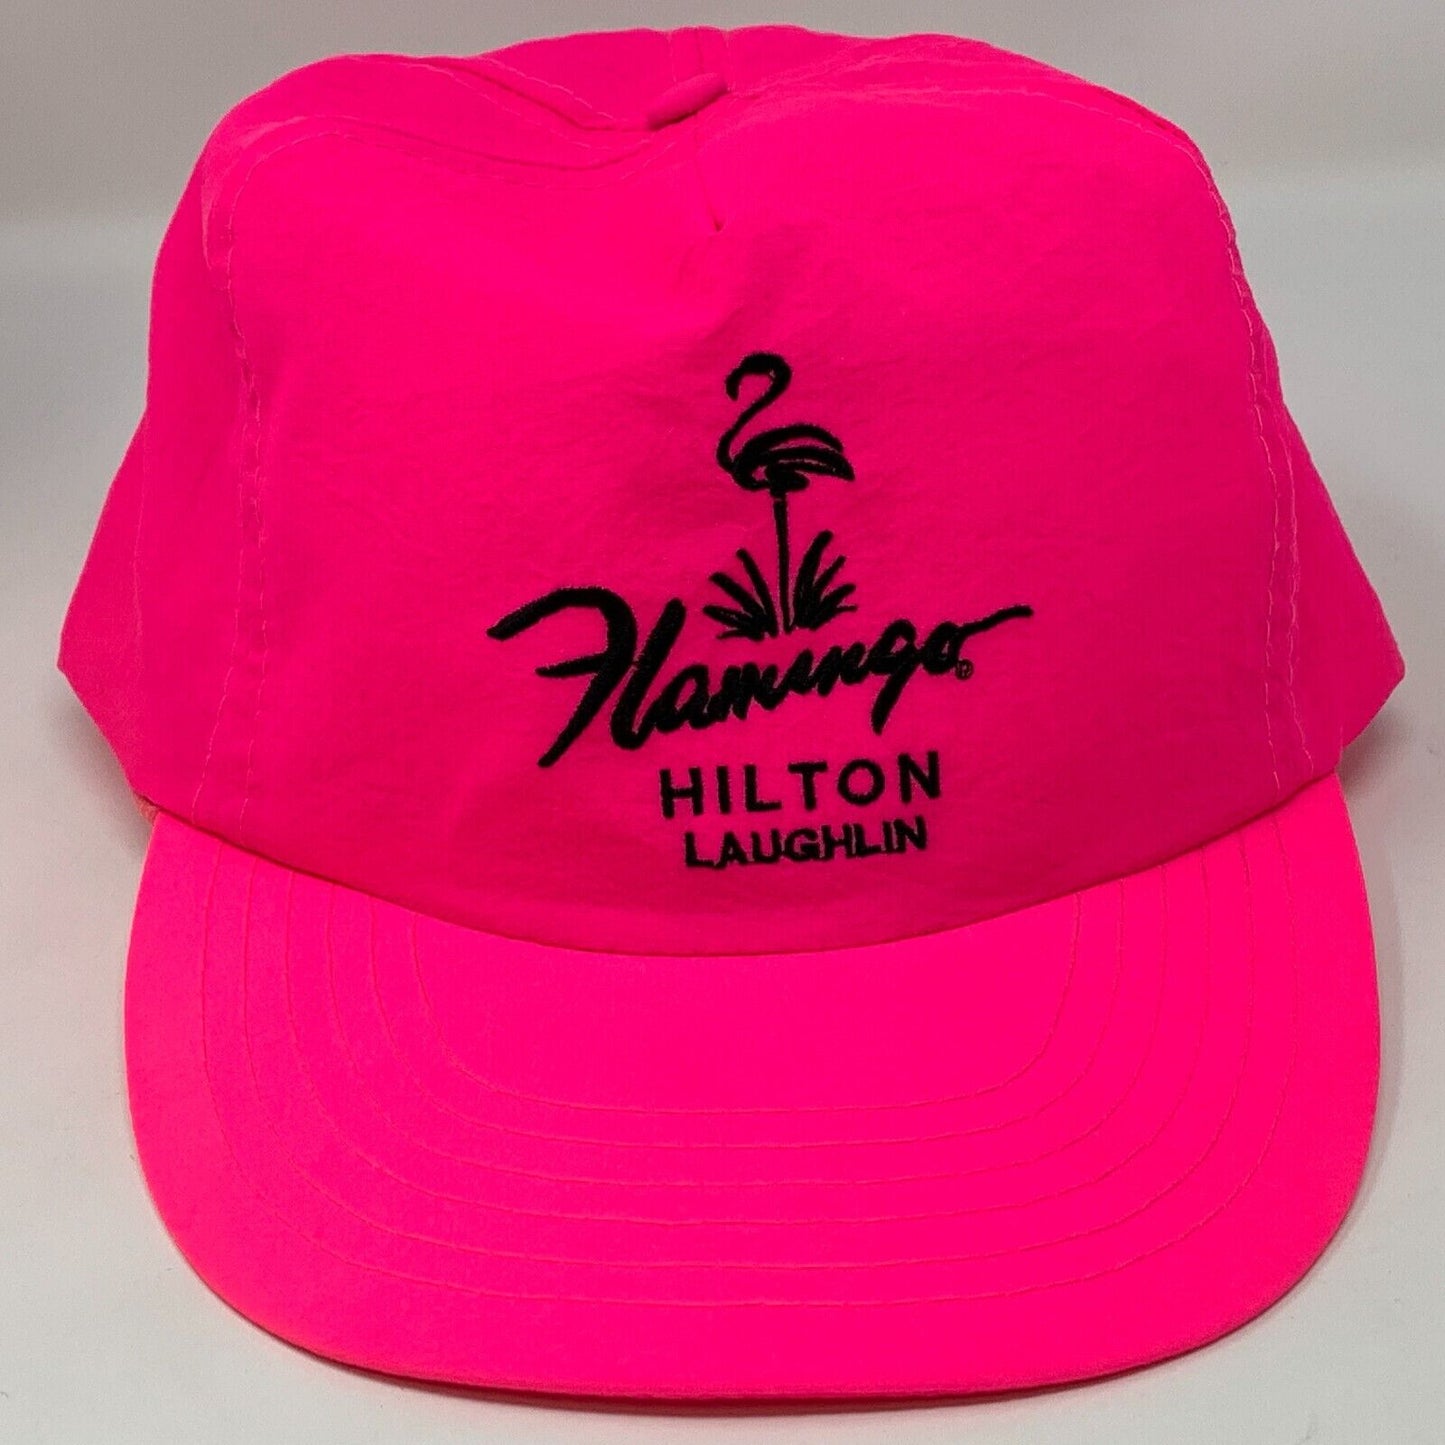 Vintage 90s Flamingo Hilton Hotel Casino Snapback Hat Laughlin Pink Baseball Cap